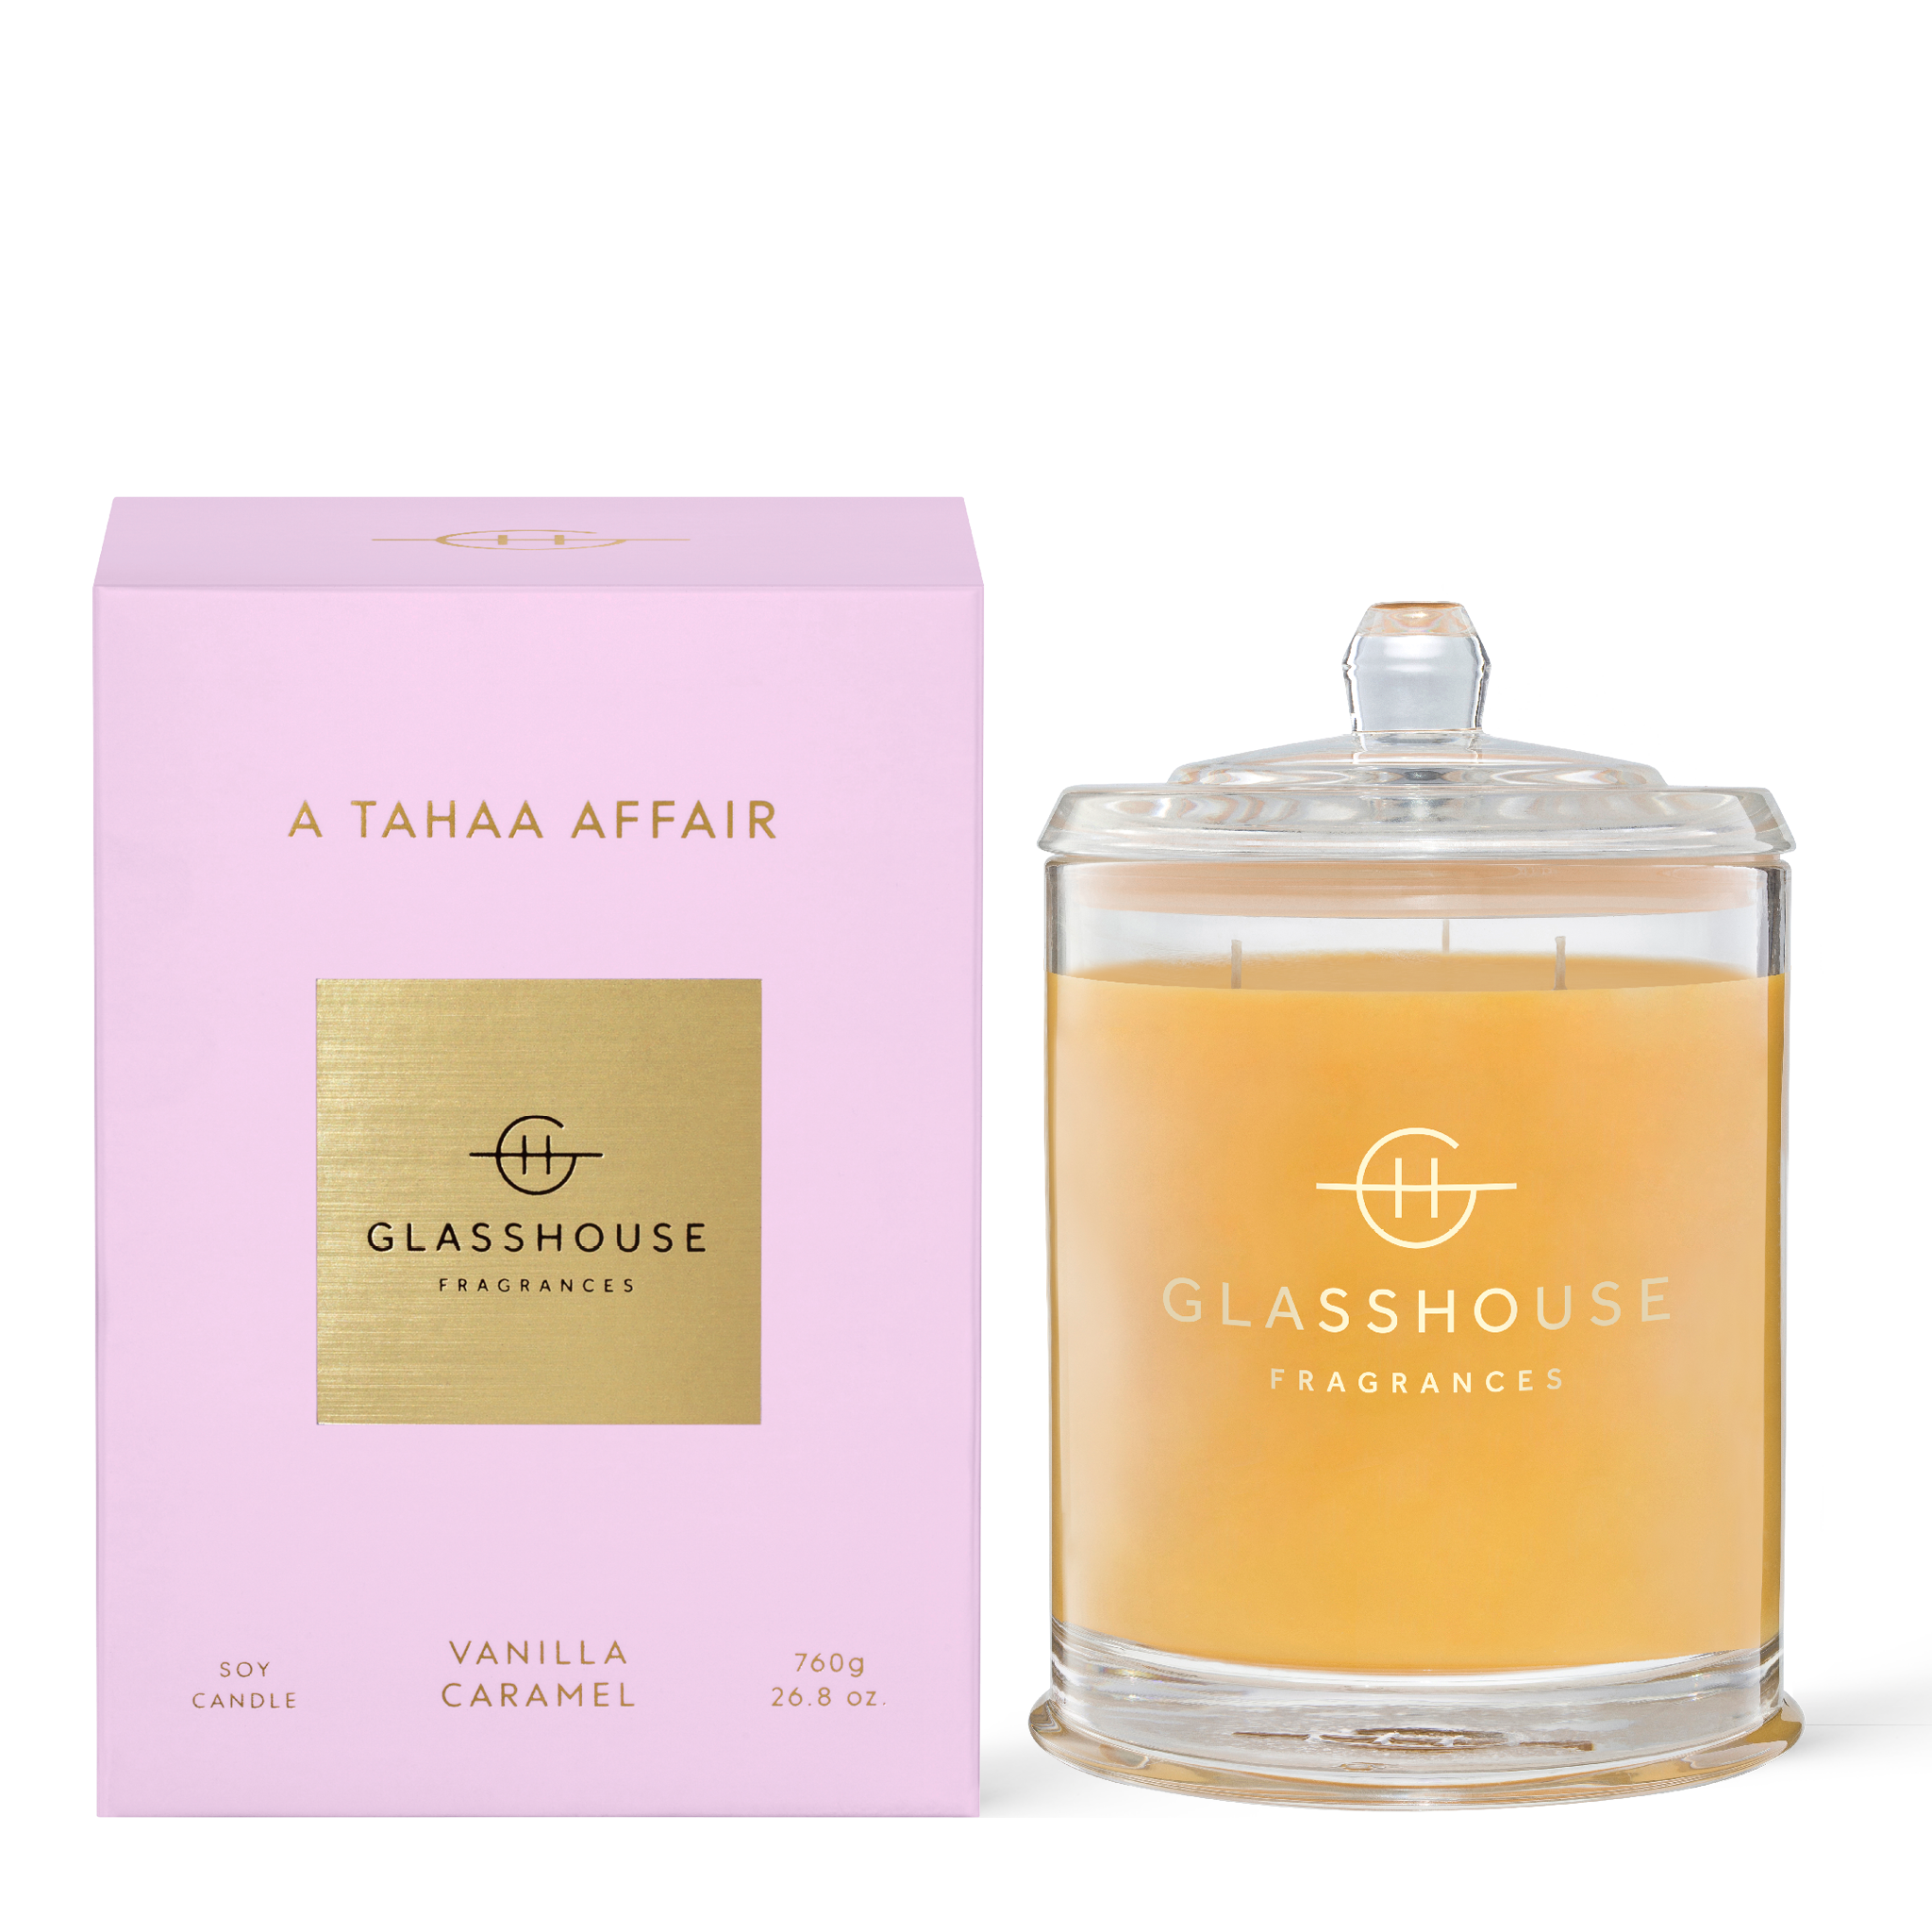 Glasshouse Fragrances A Tahaa Affair Vanilla Caramel 760g Soy Candle with box